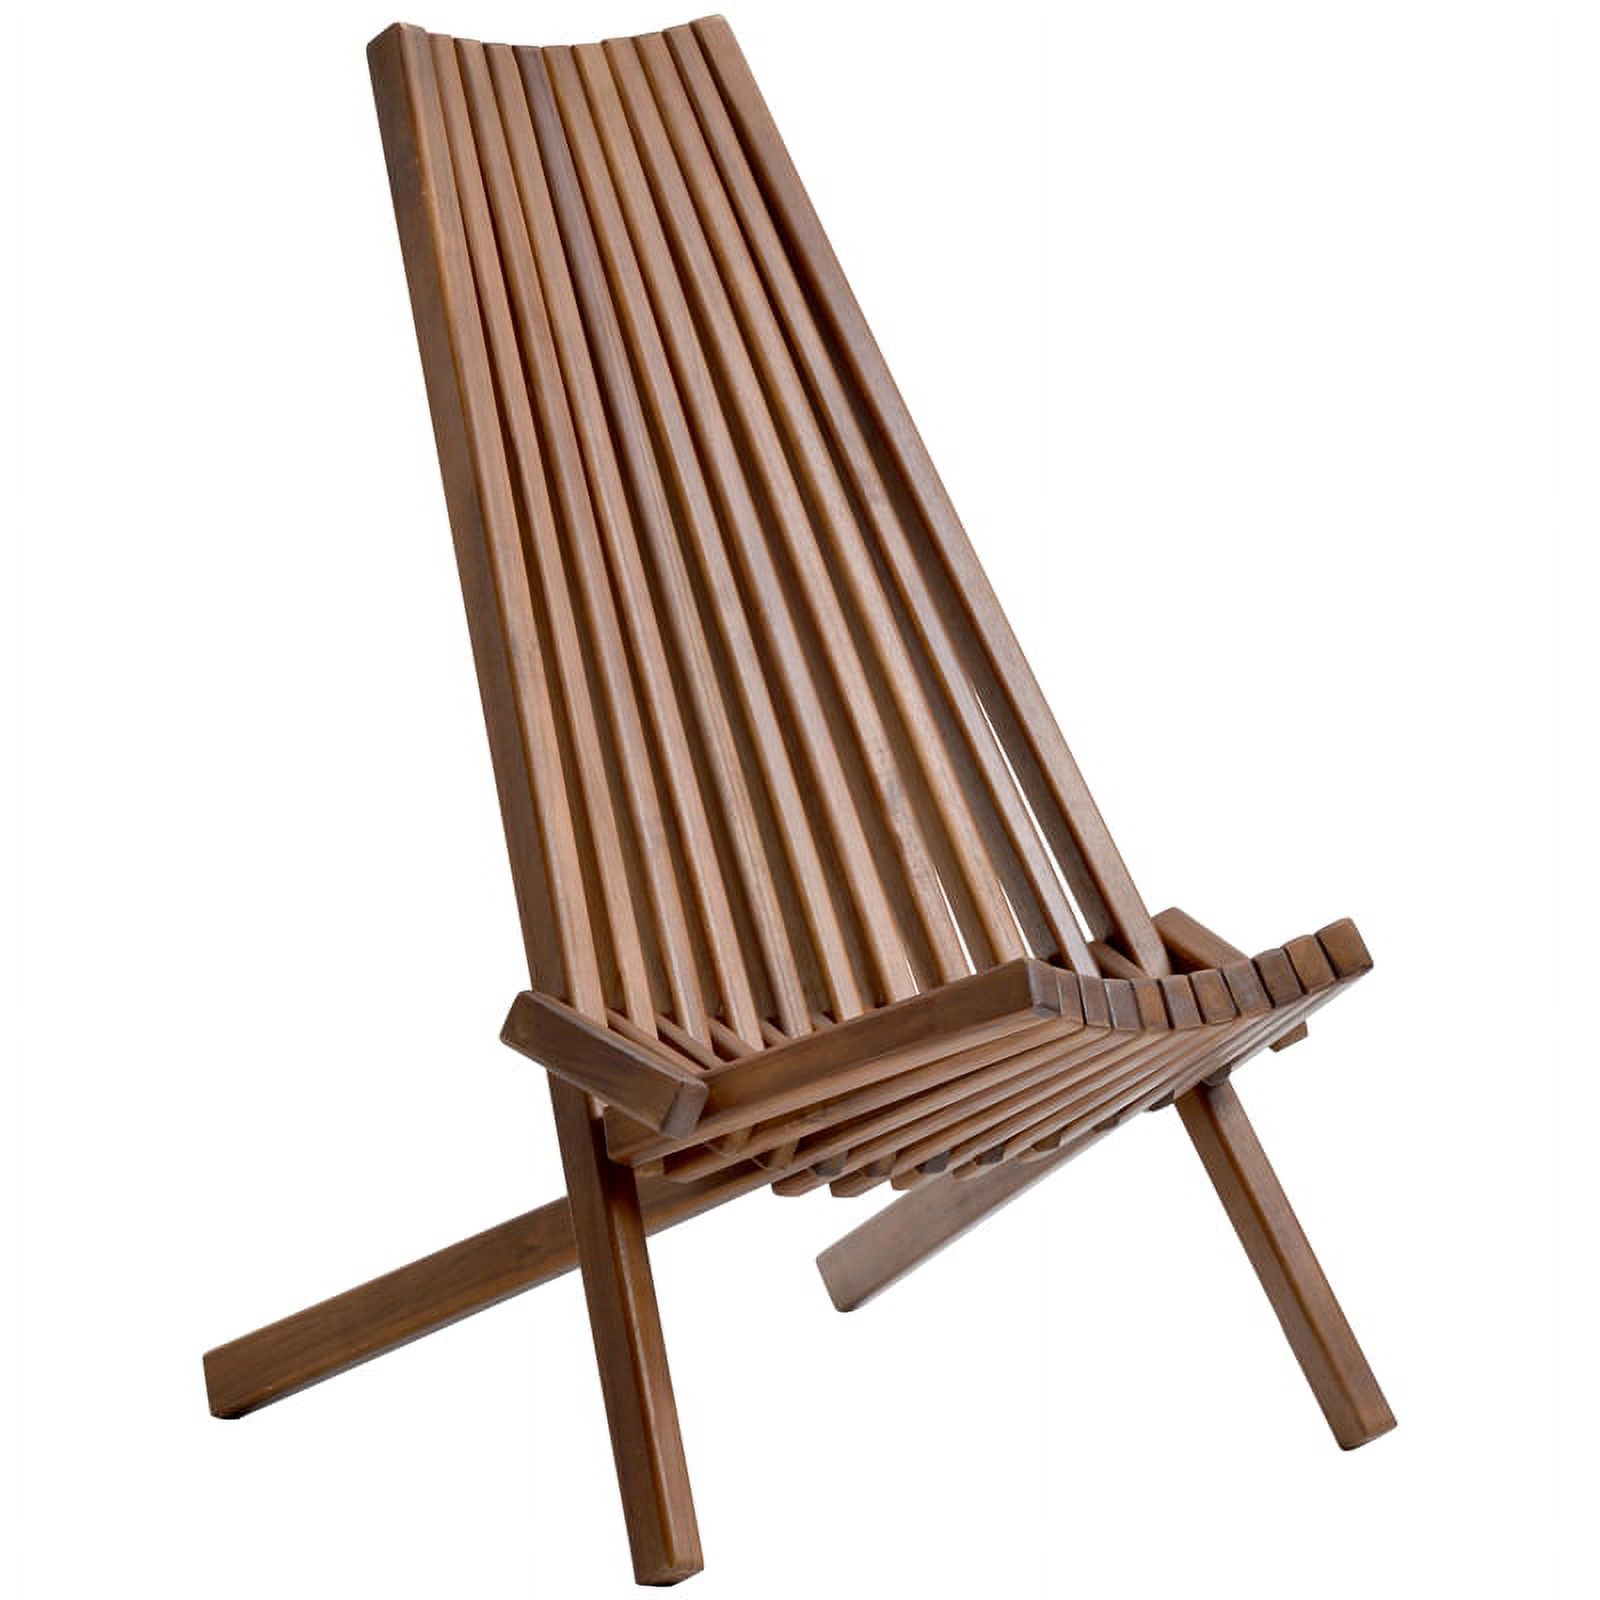 CRO Decor Folding Garden Chairs Acacia Wood Lounge Chair Yard Balcony Furniture - image 3 of 10